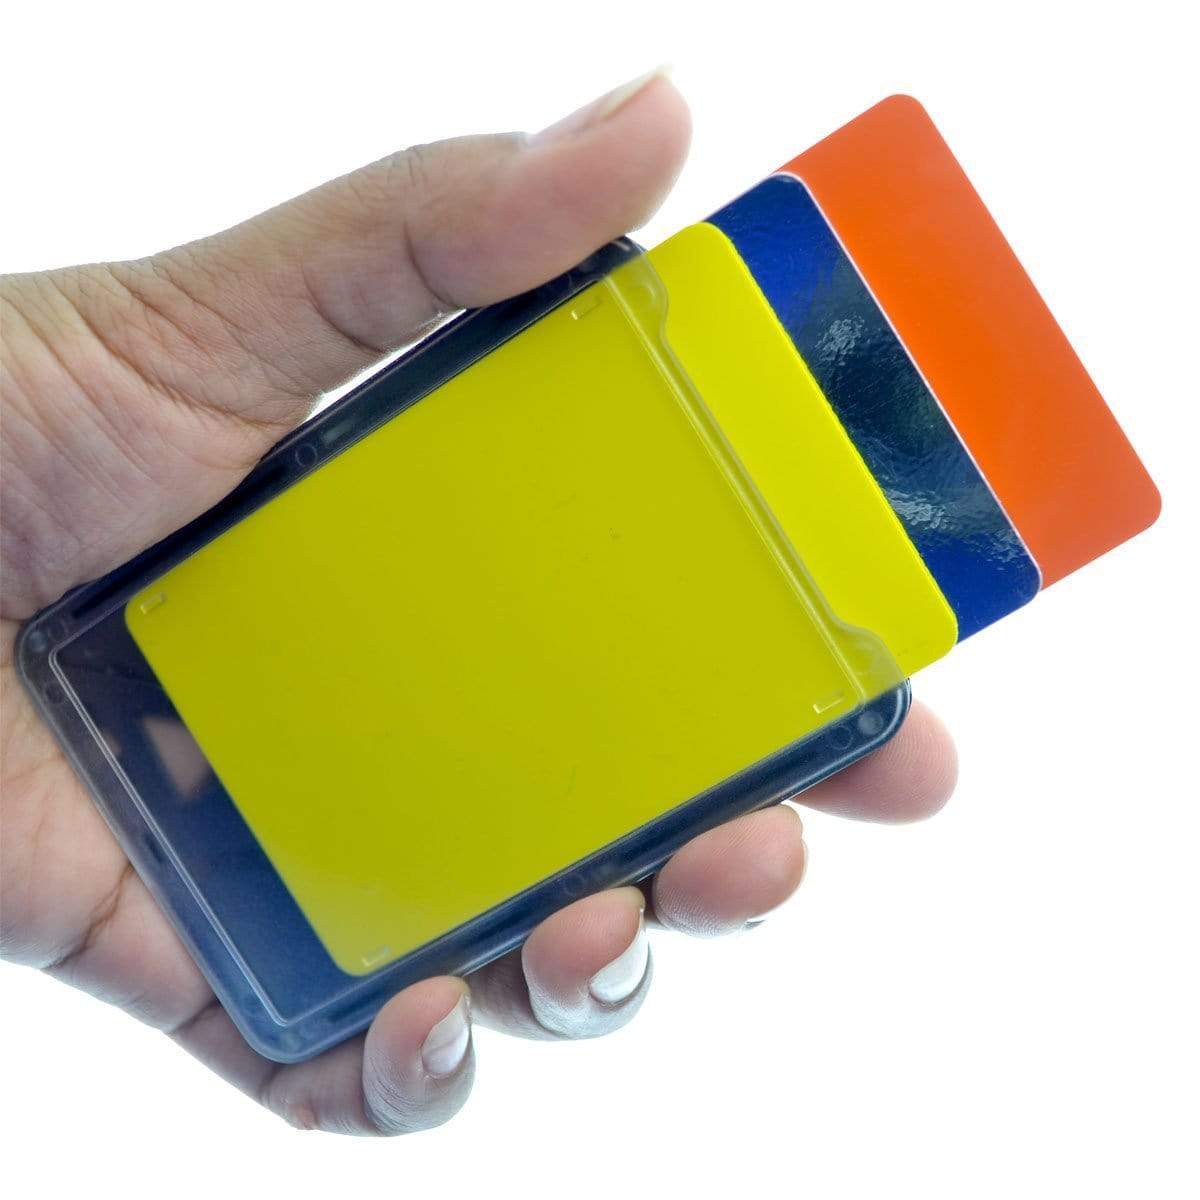 ID Badge Card Holder Plastic: Plastic and Durable Badge Display